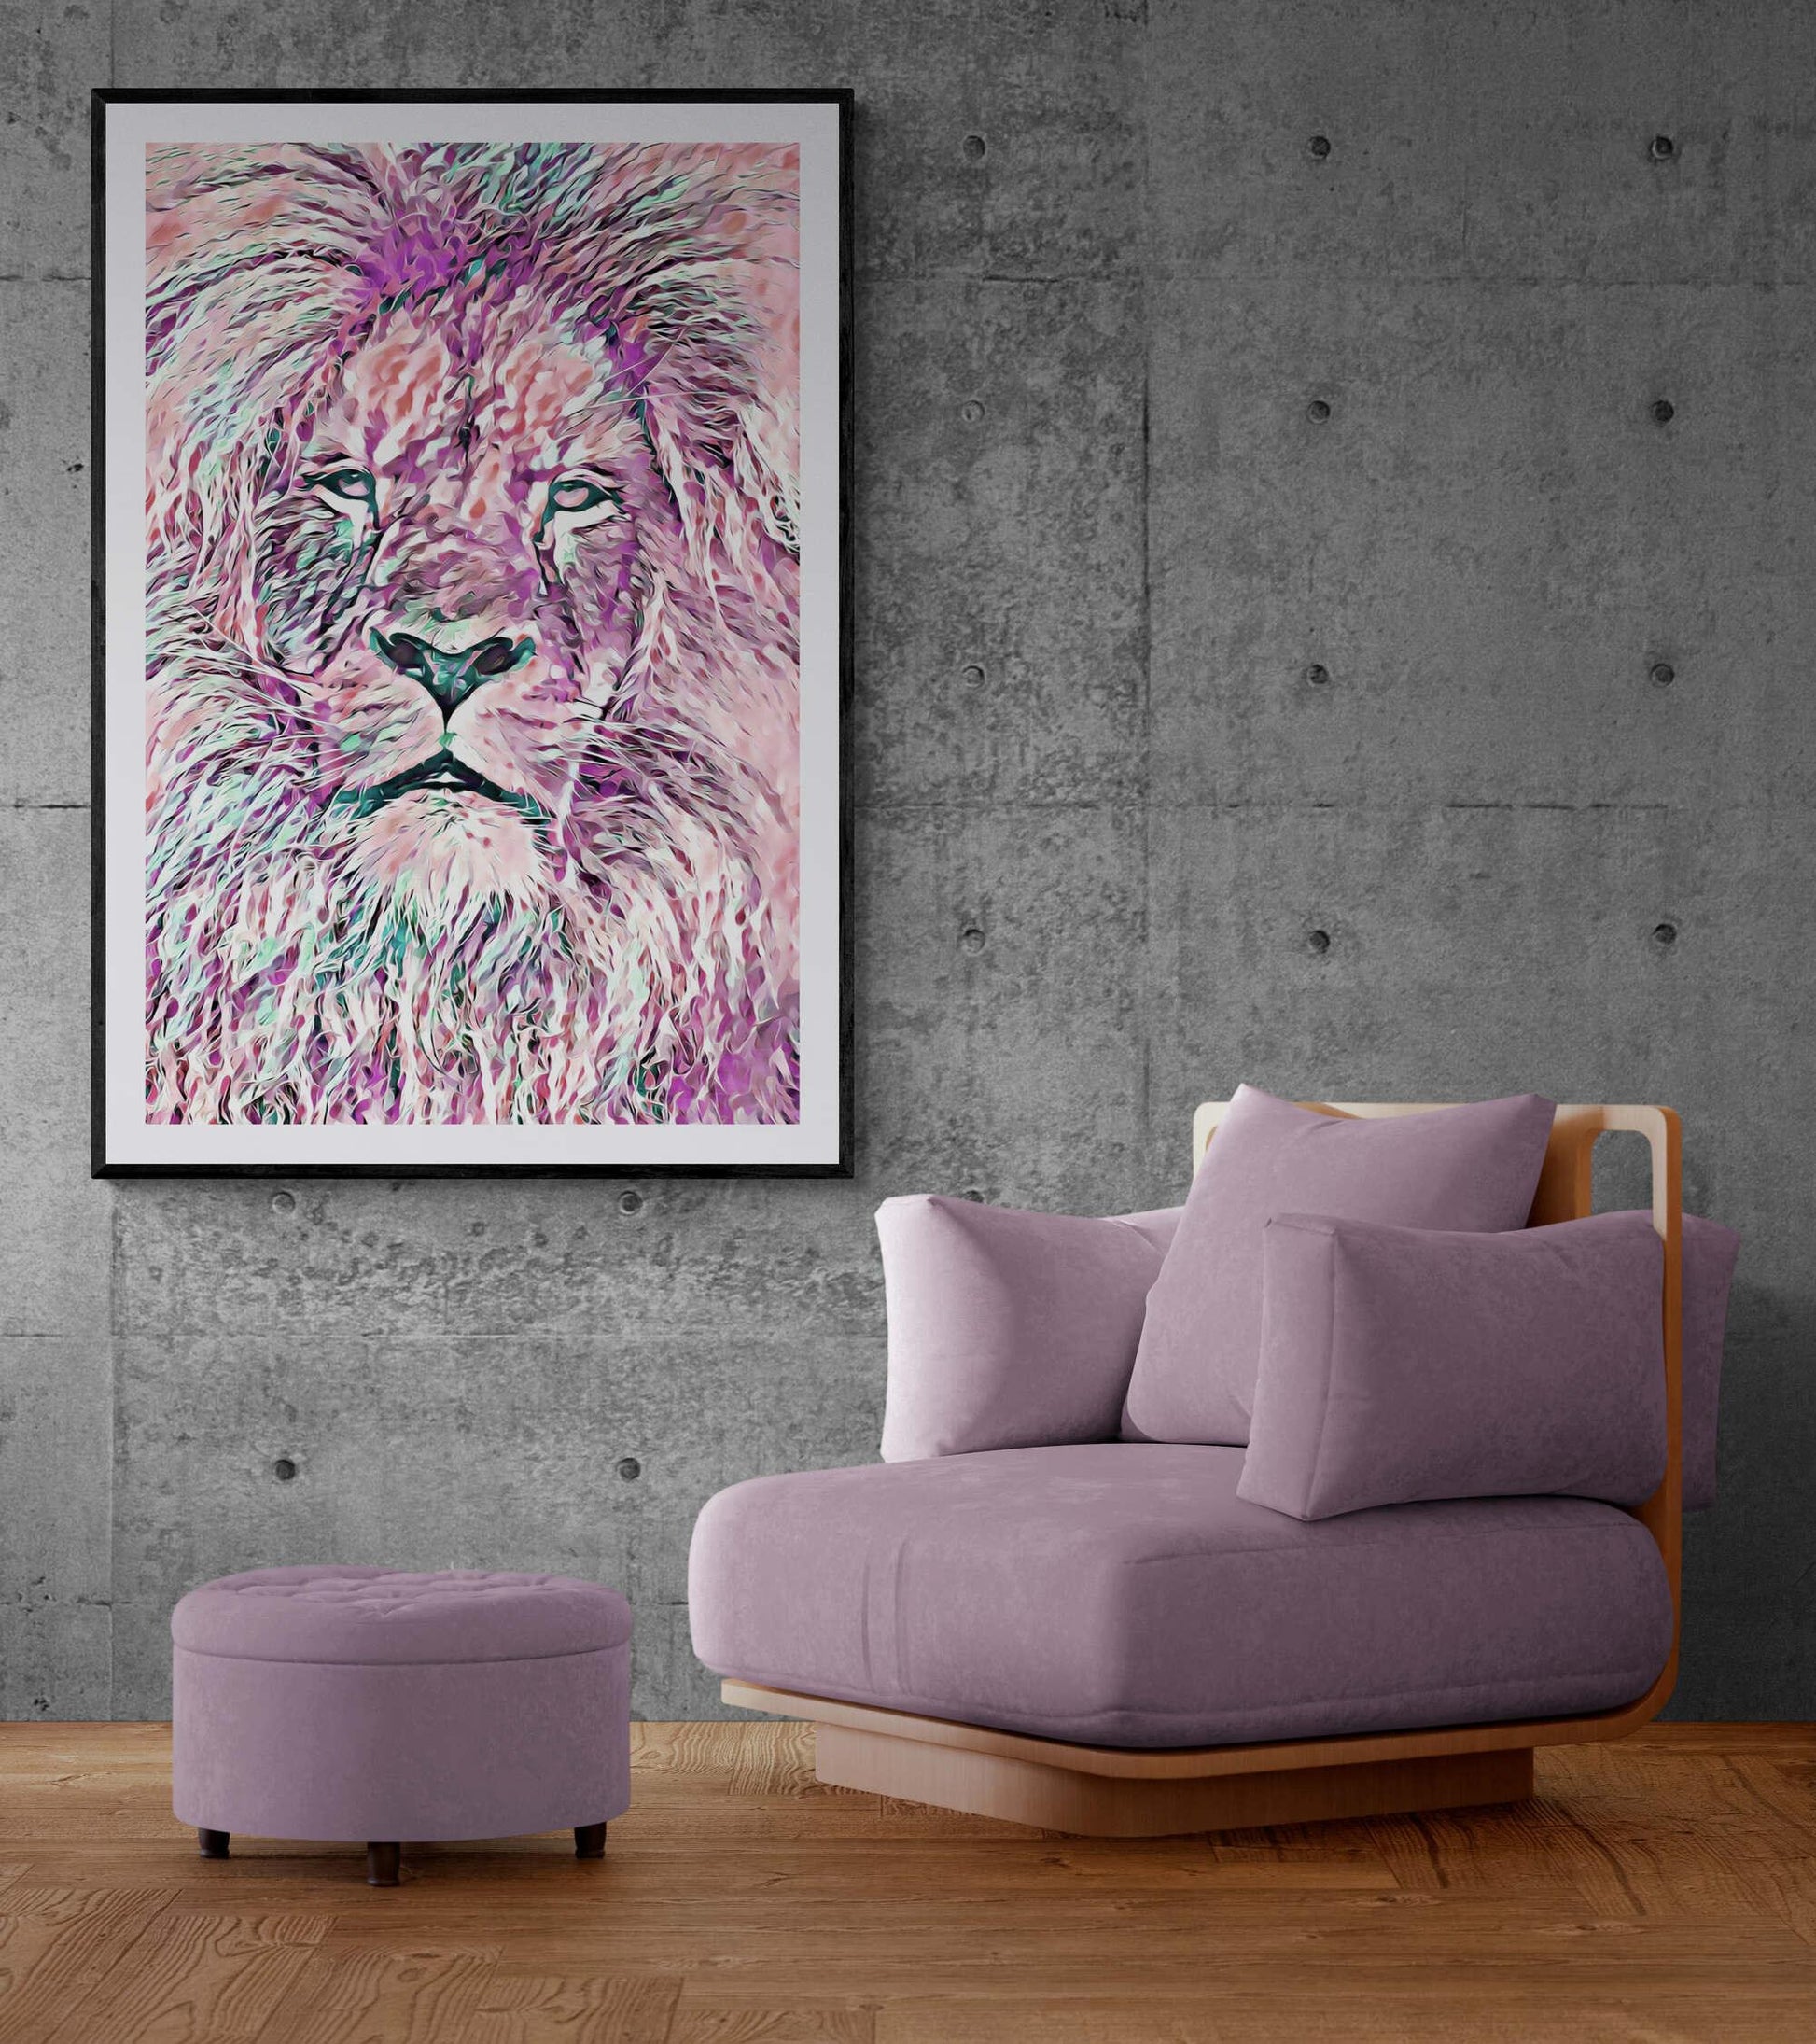 Pink Lion Tycoon Wall Art - ARTAX GALLERY